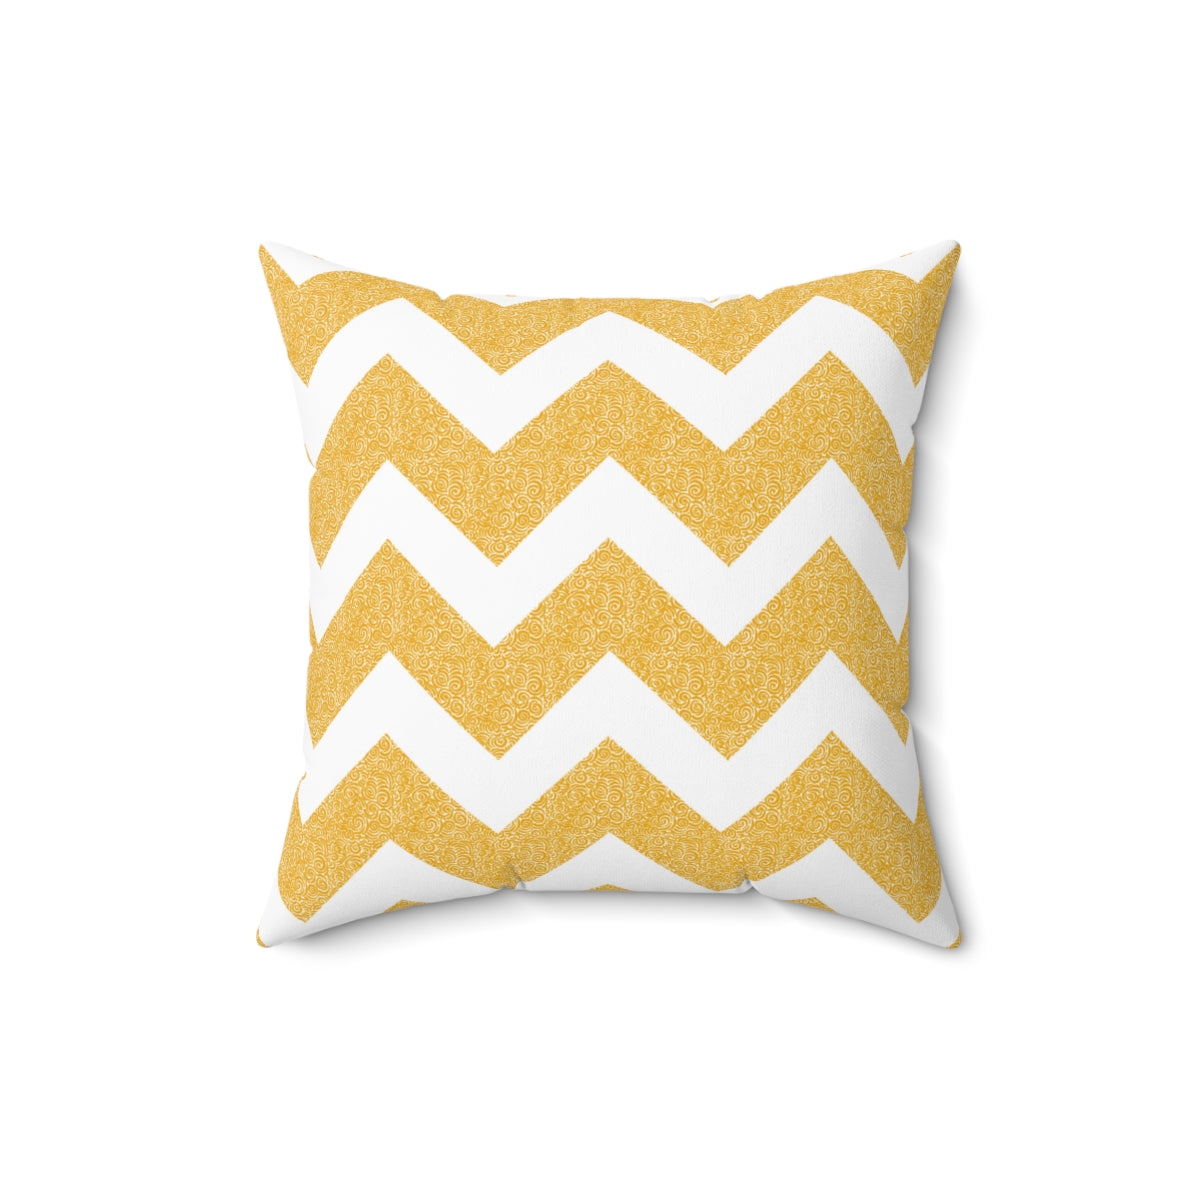 Yellow waves pillow Case - Spun Polyester Square